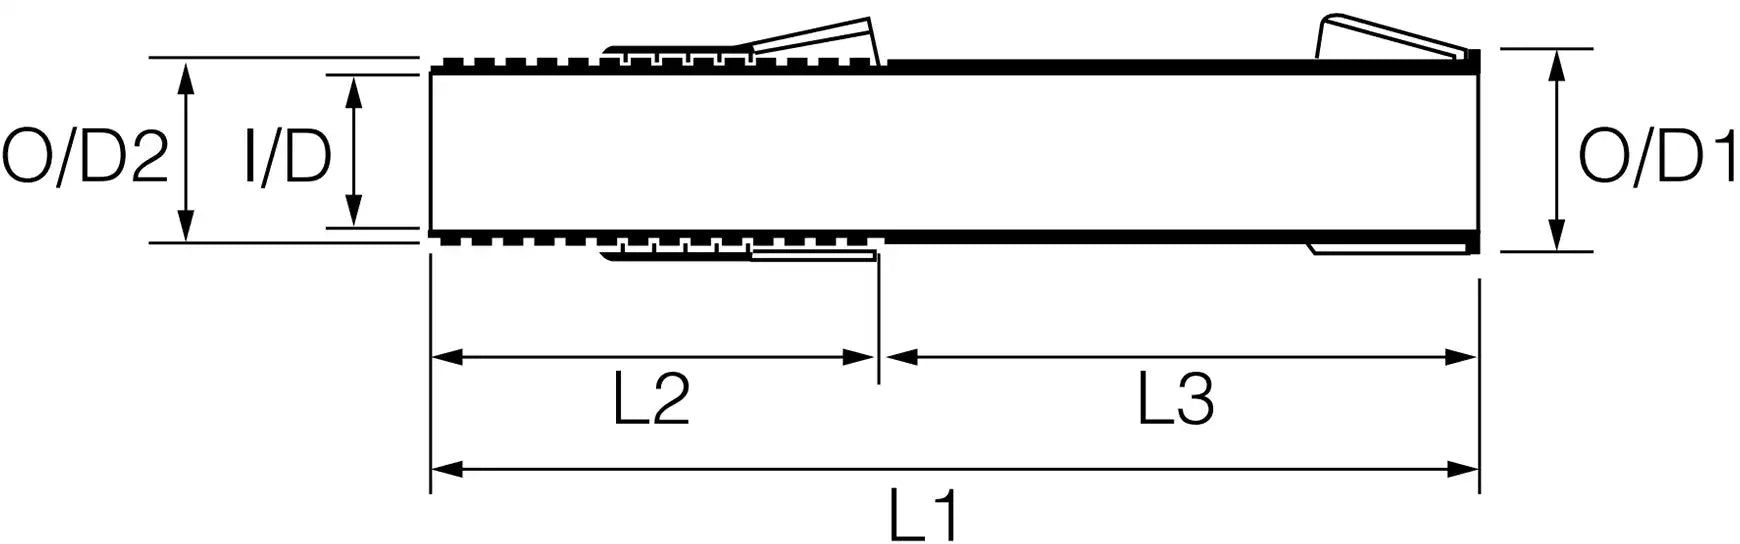 fuji dps spinning reel seat size chart